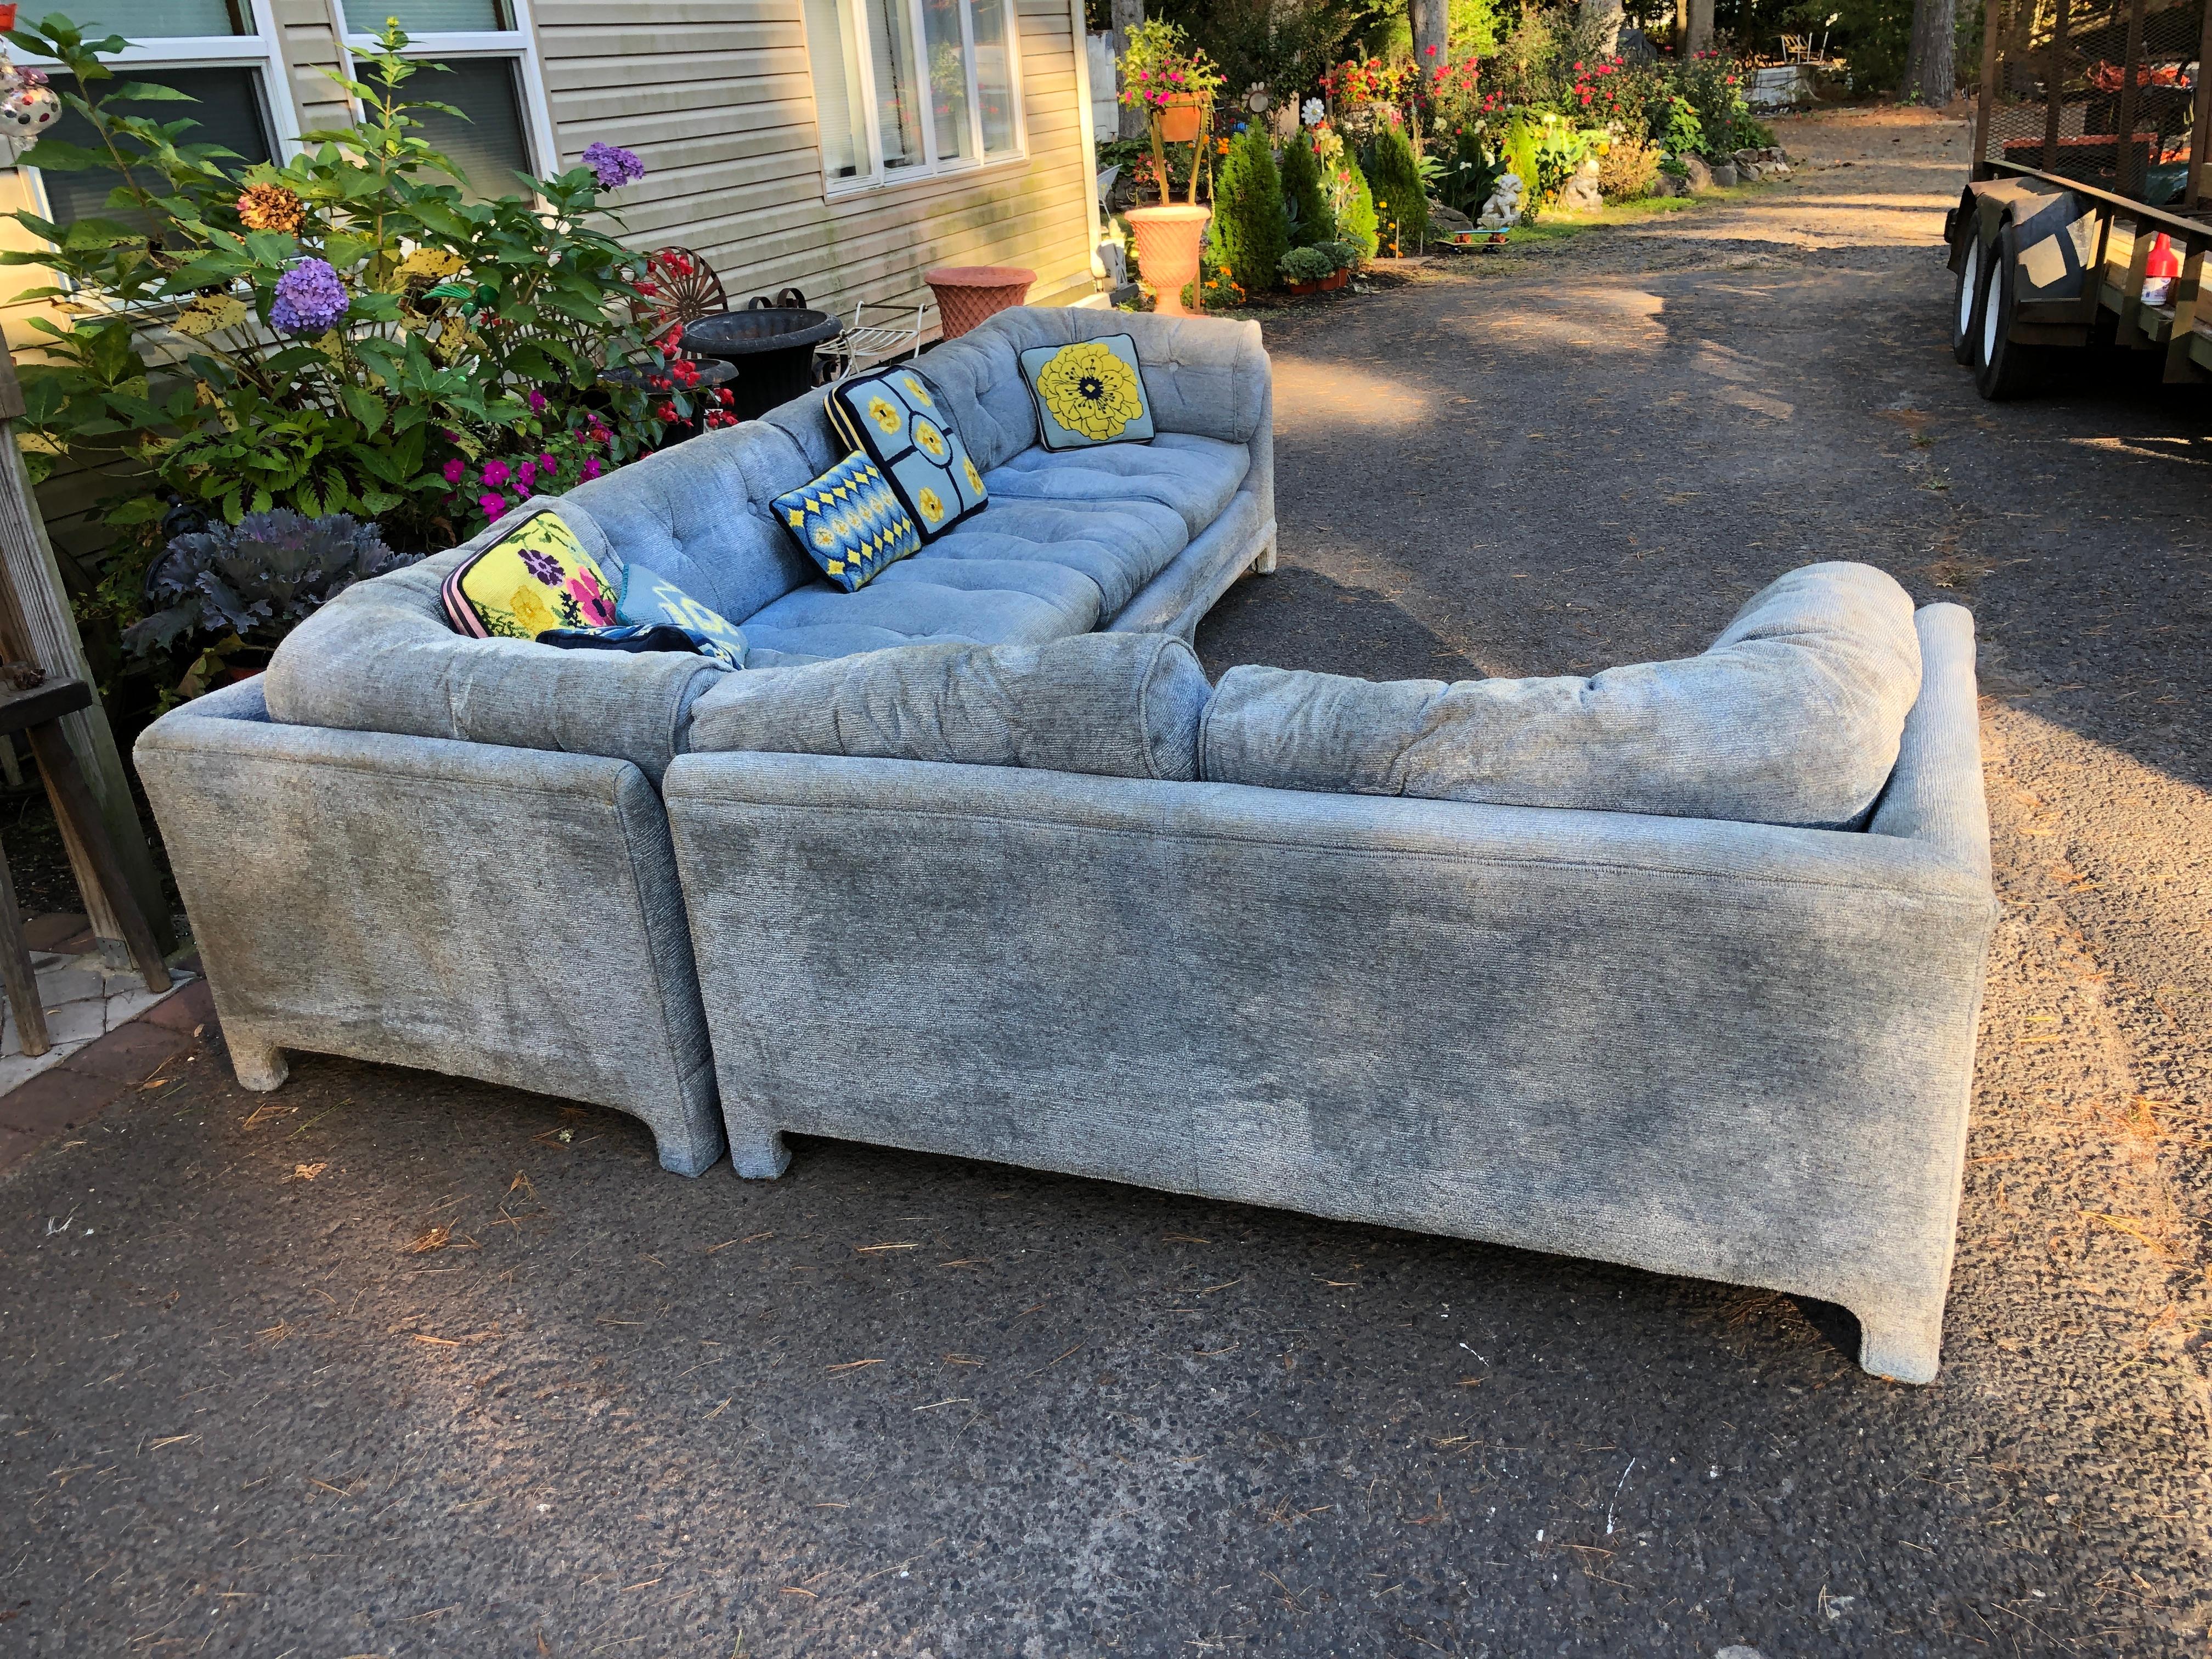 Sensational 3 Piece Milo Baughman style Sectional Sofa Century Furniture Co. In Good Condition For Sale In Pemberton, NJ